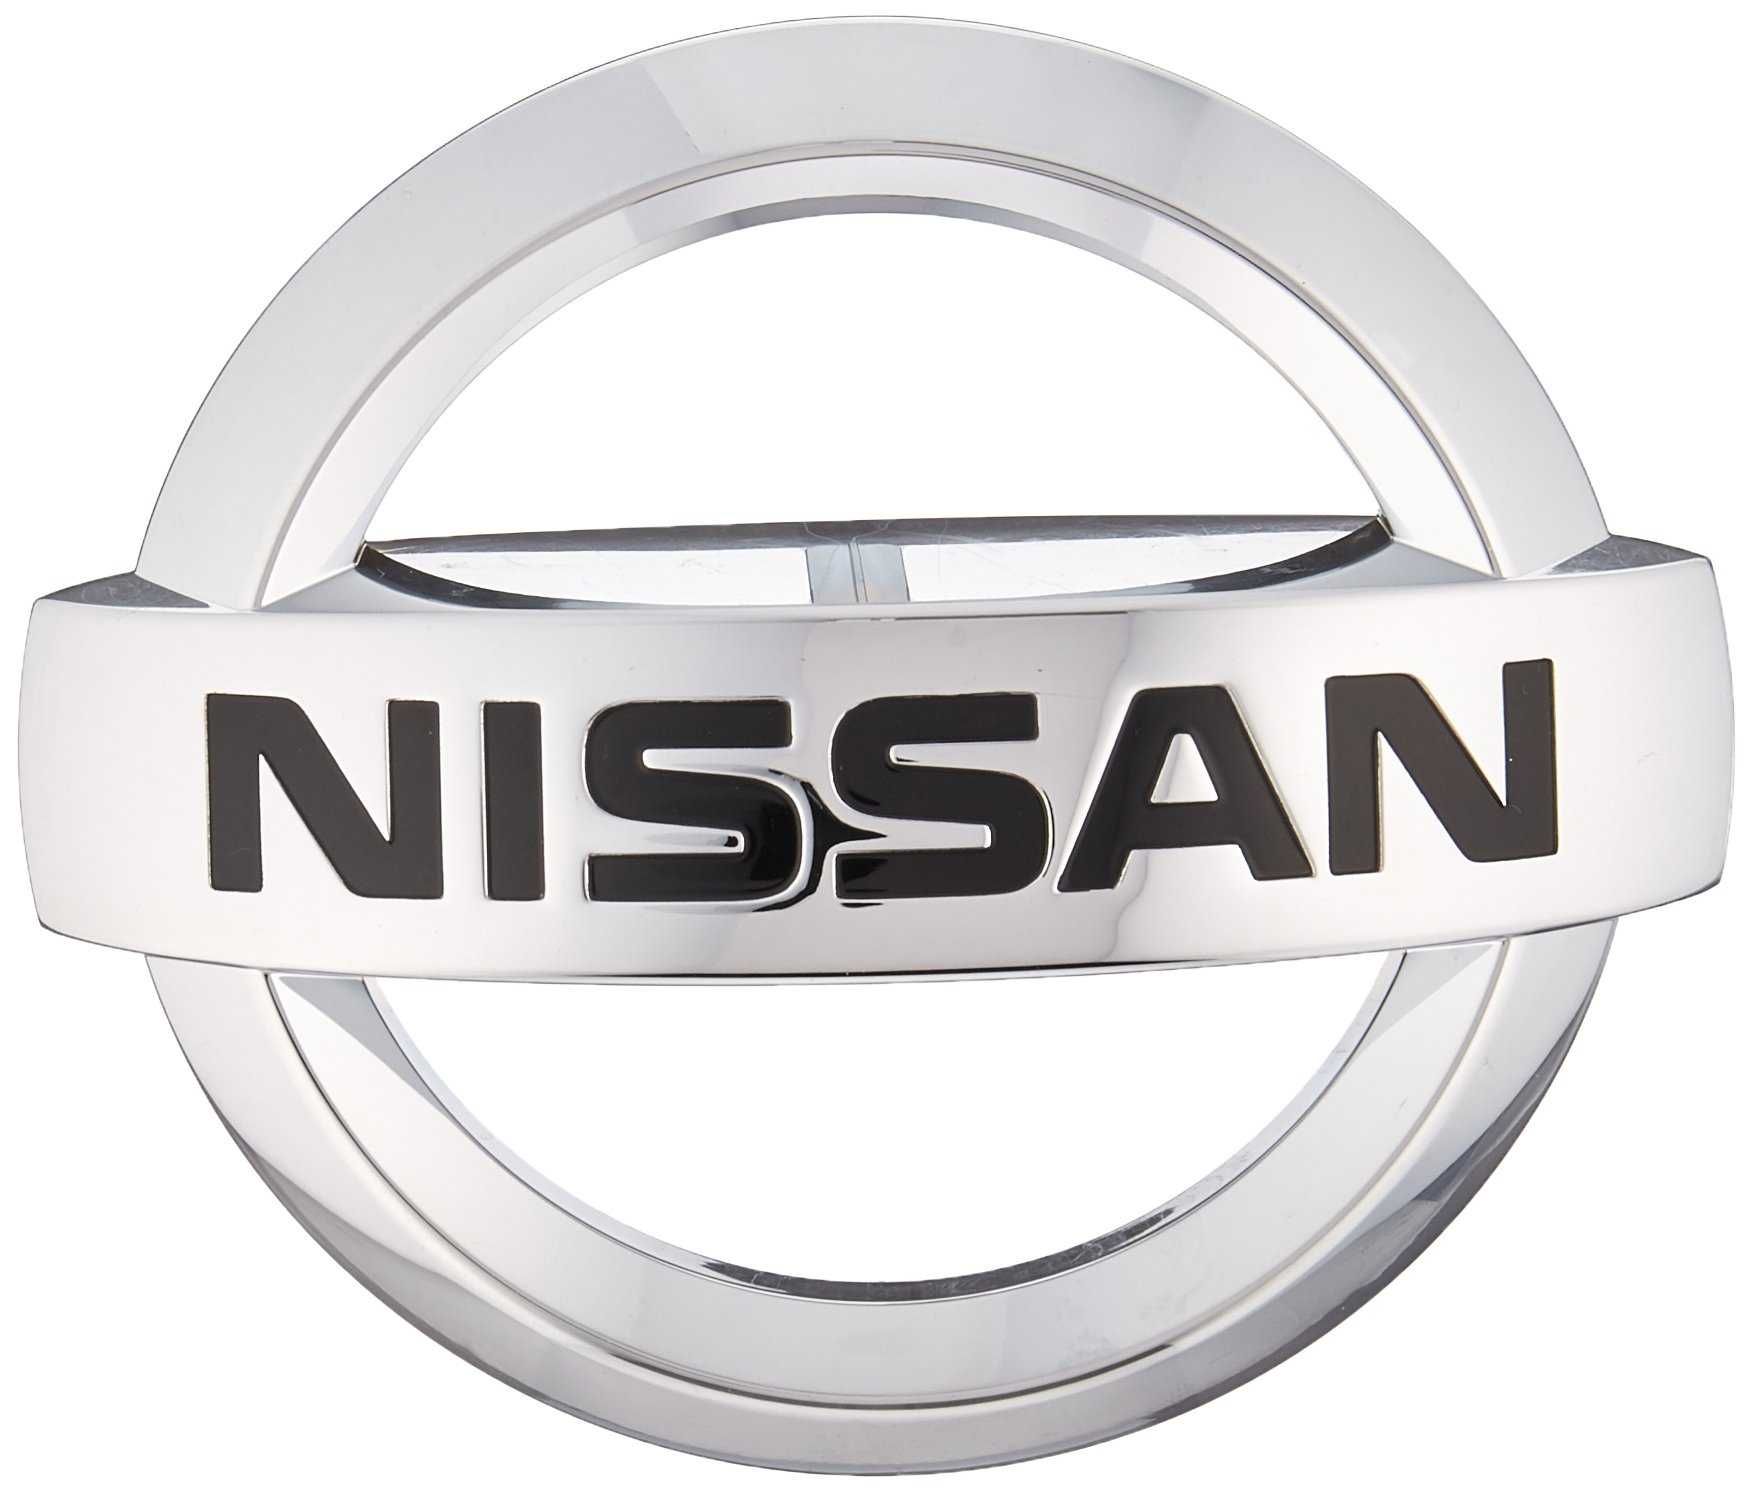 Запчасти на Nissan [Ниссан] в наличии и на заказ